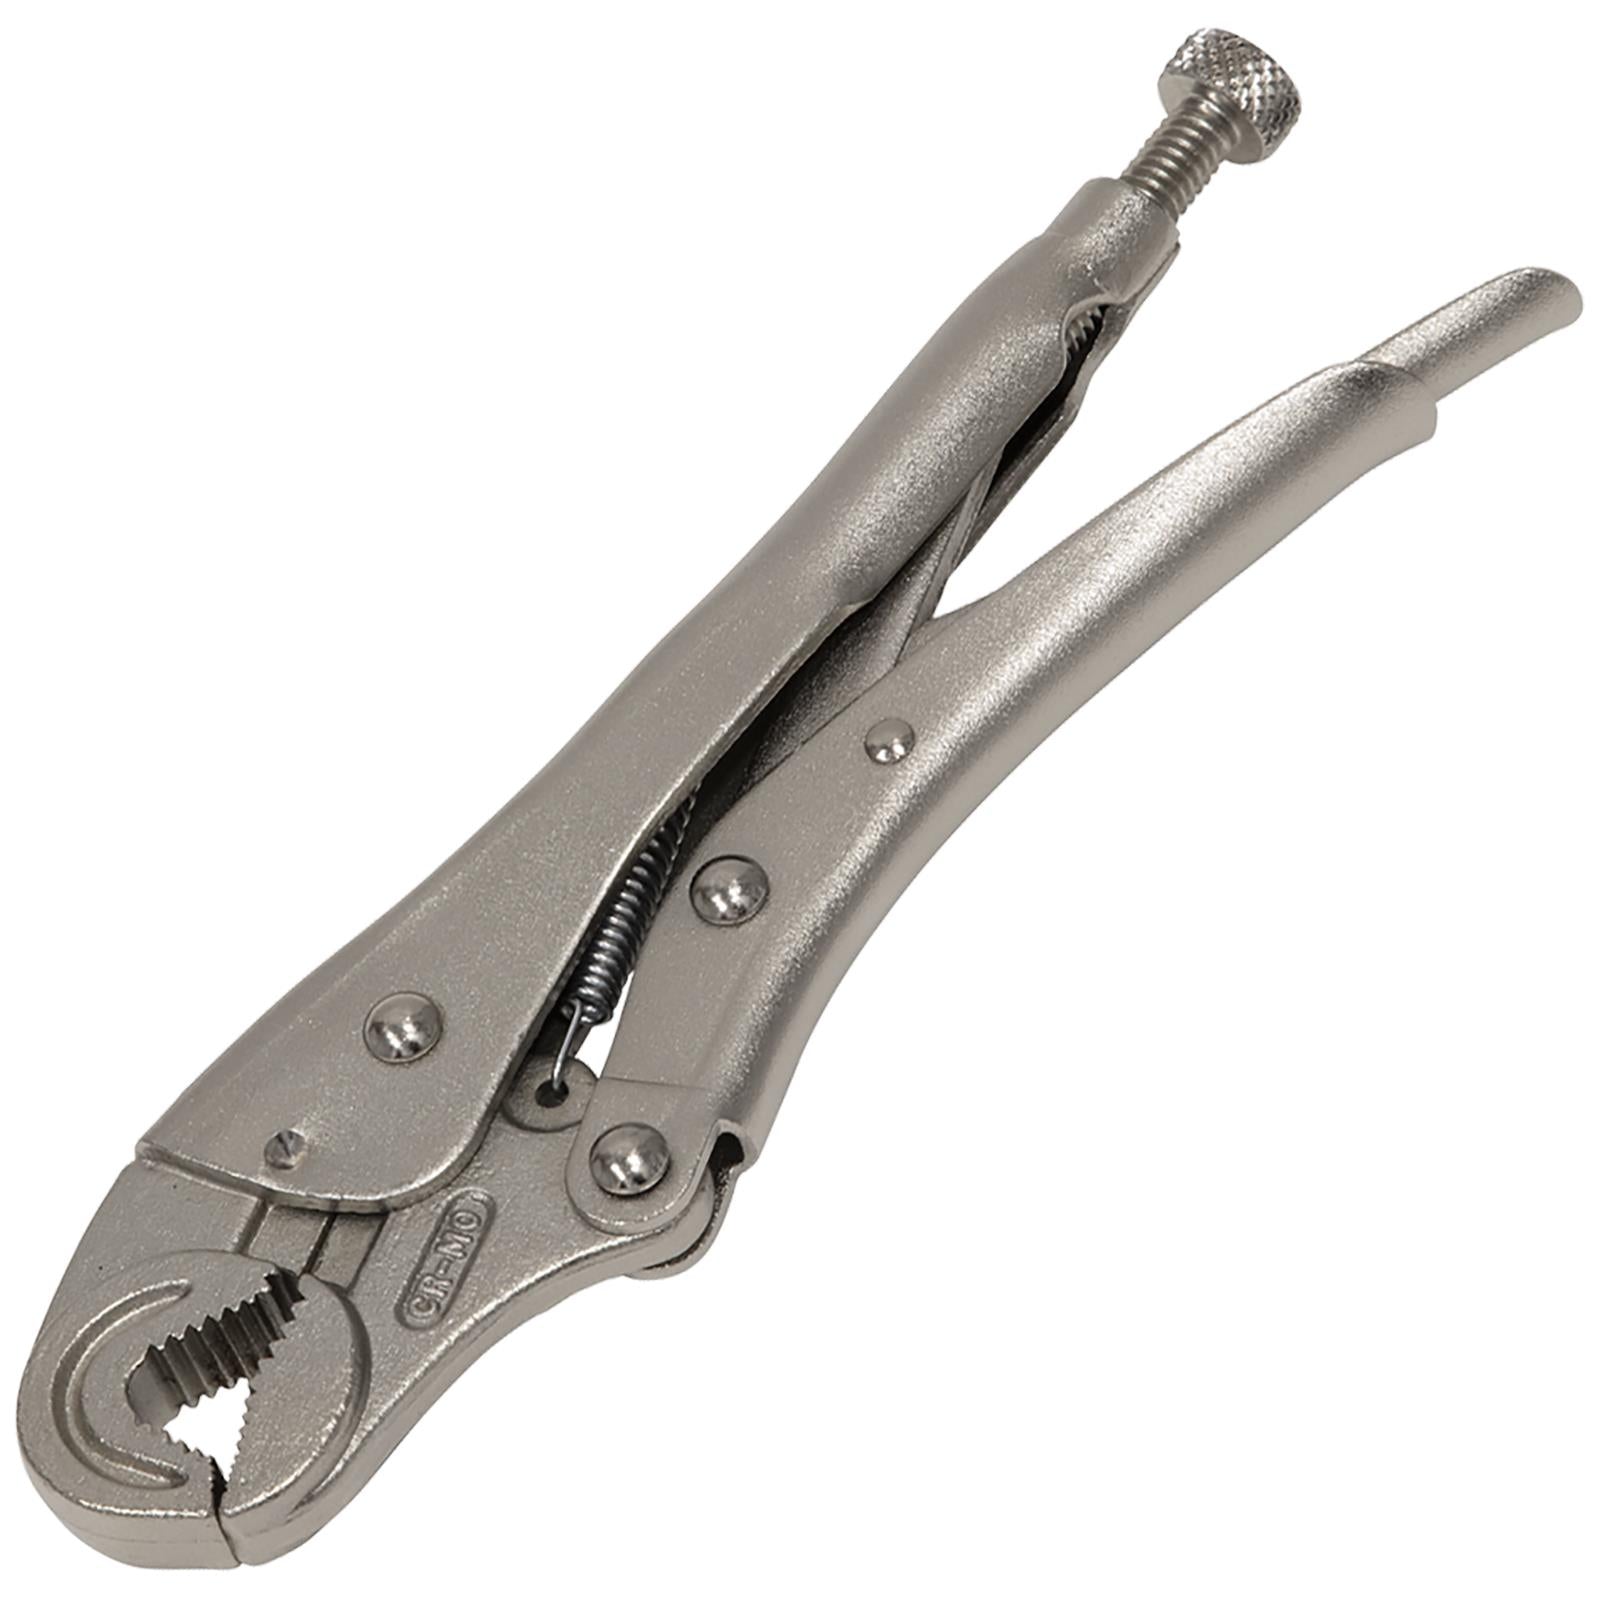 Sealey Premier Locking Pliers Round Jaws 195mm 0-35mm Capacity